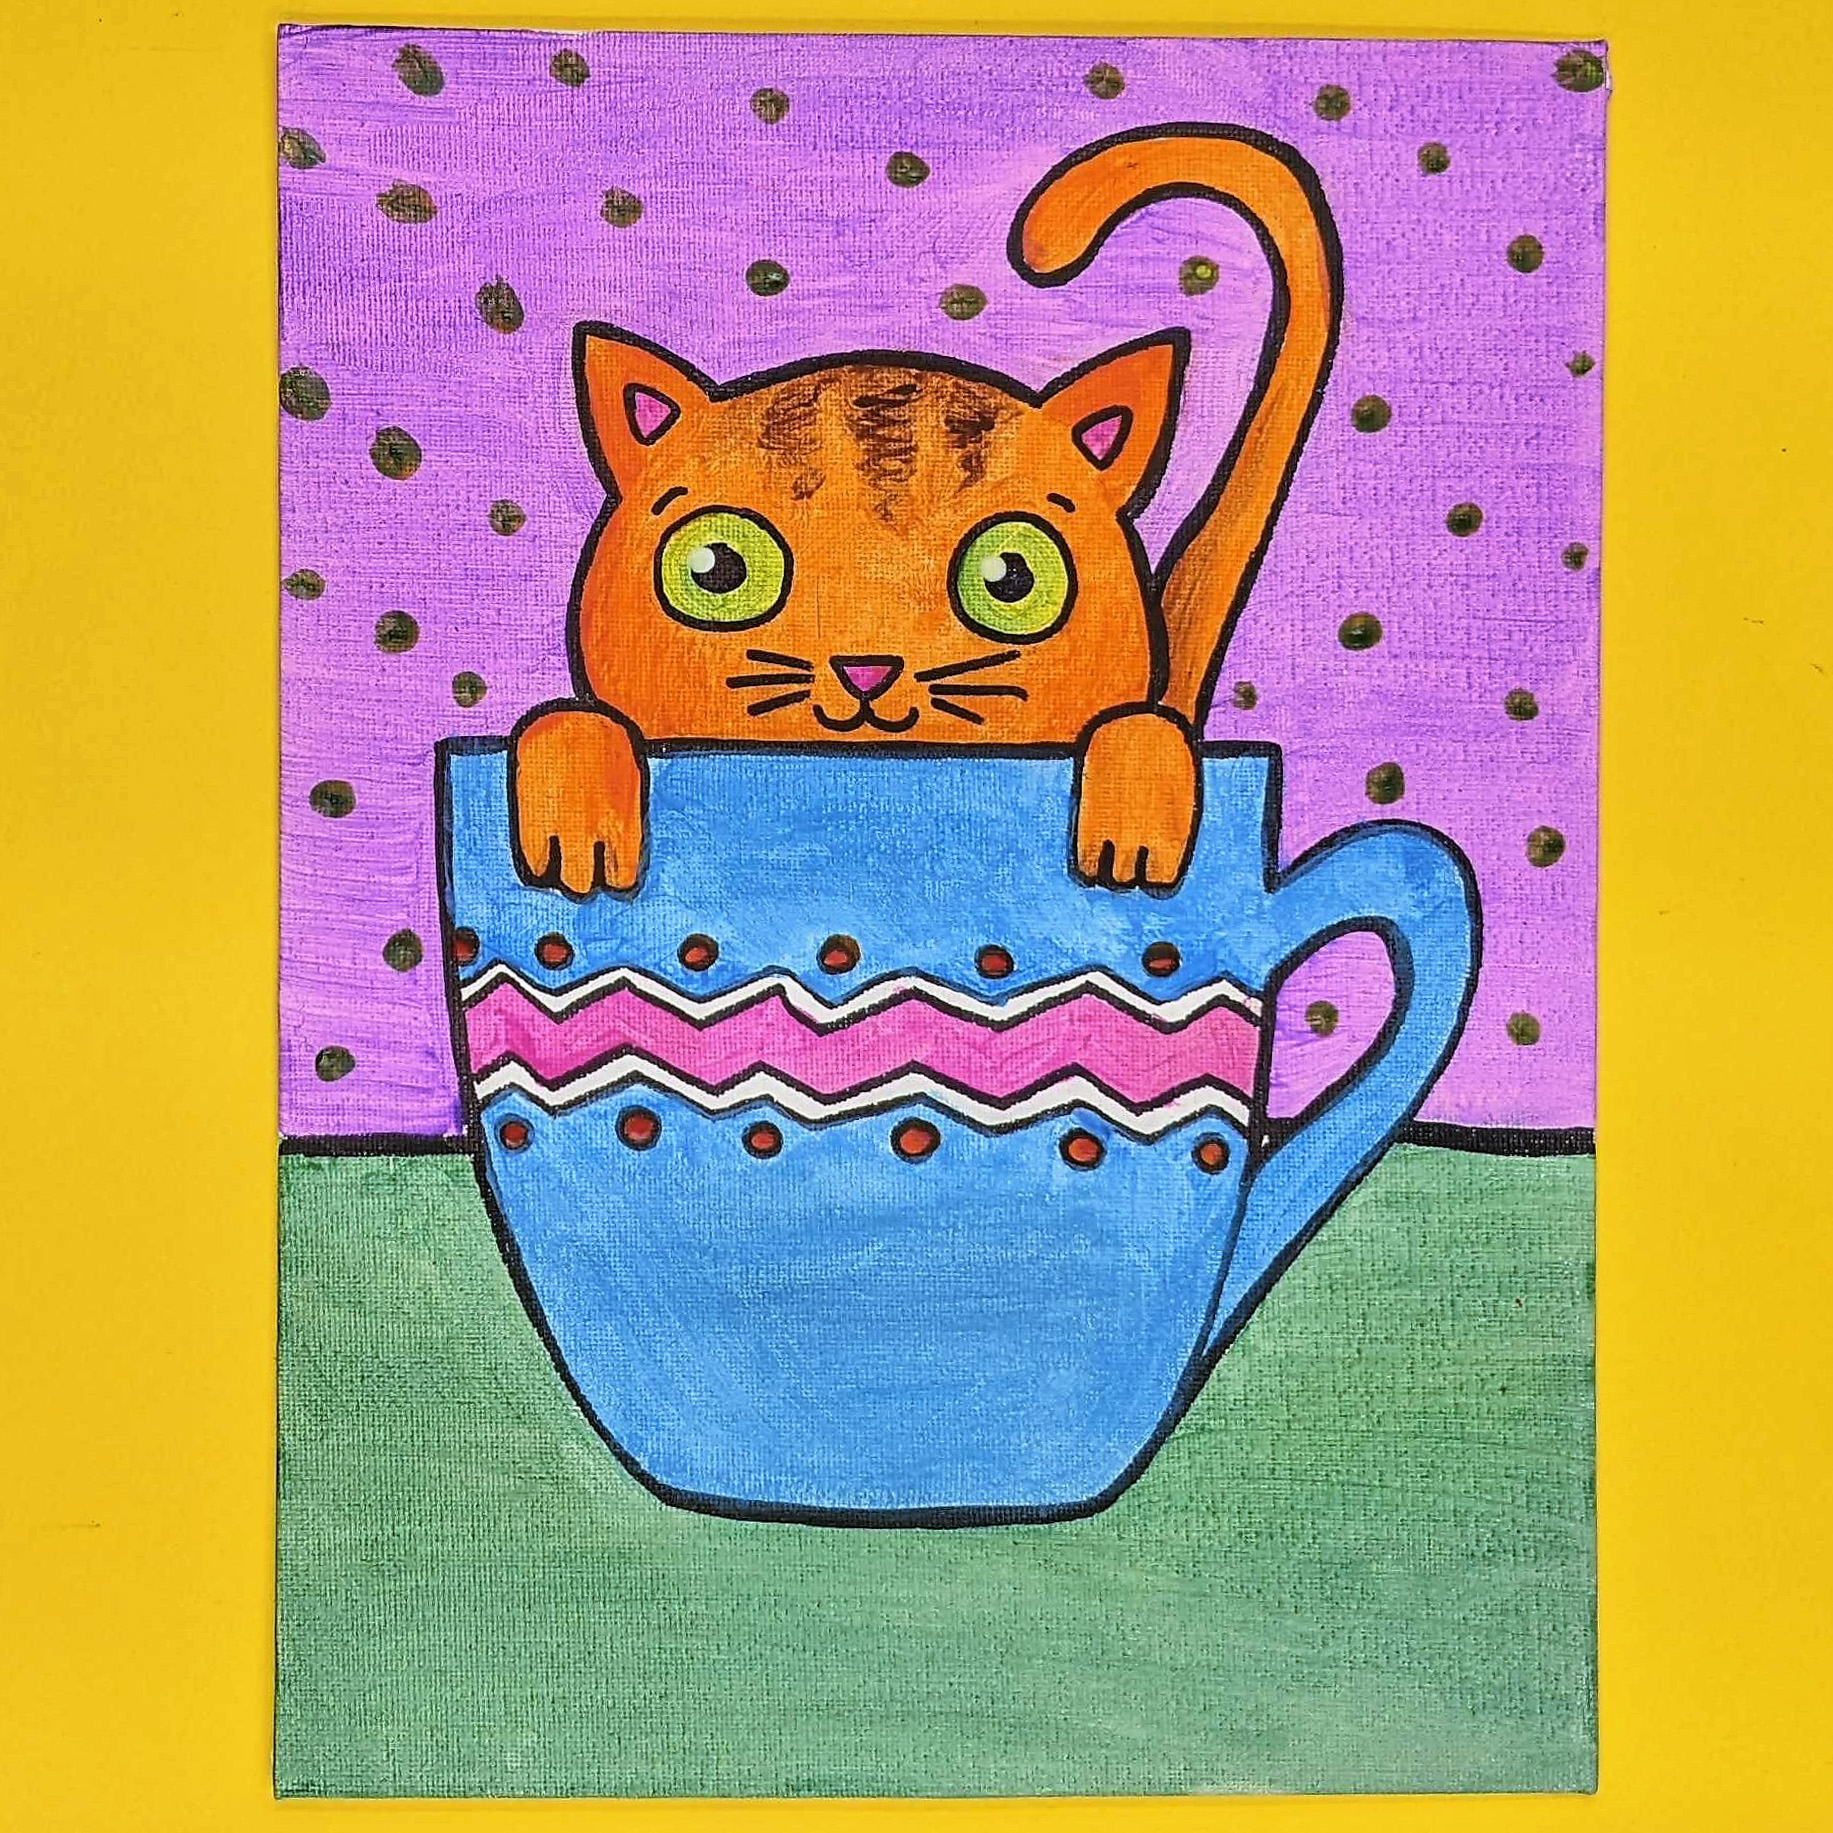 Kidcreate Mobile Studio - Fresno, Teacup Kitten Art Project